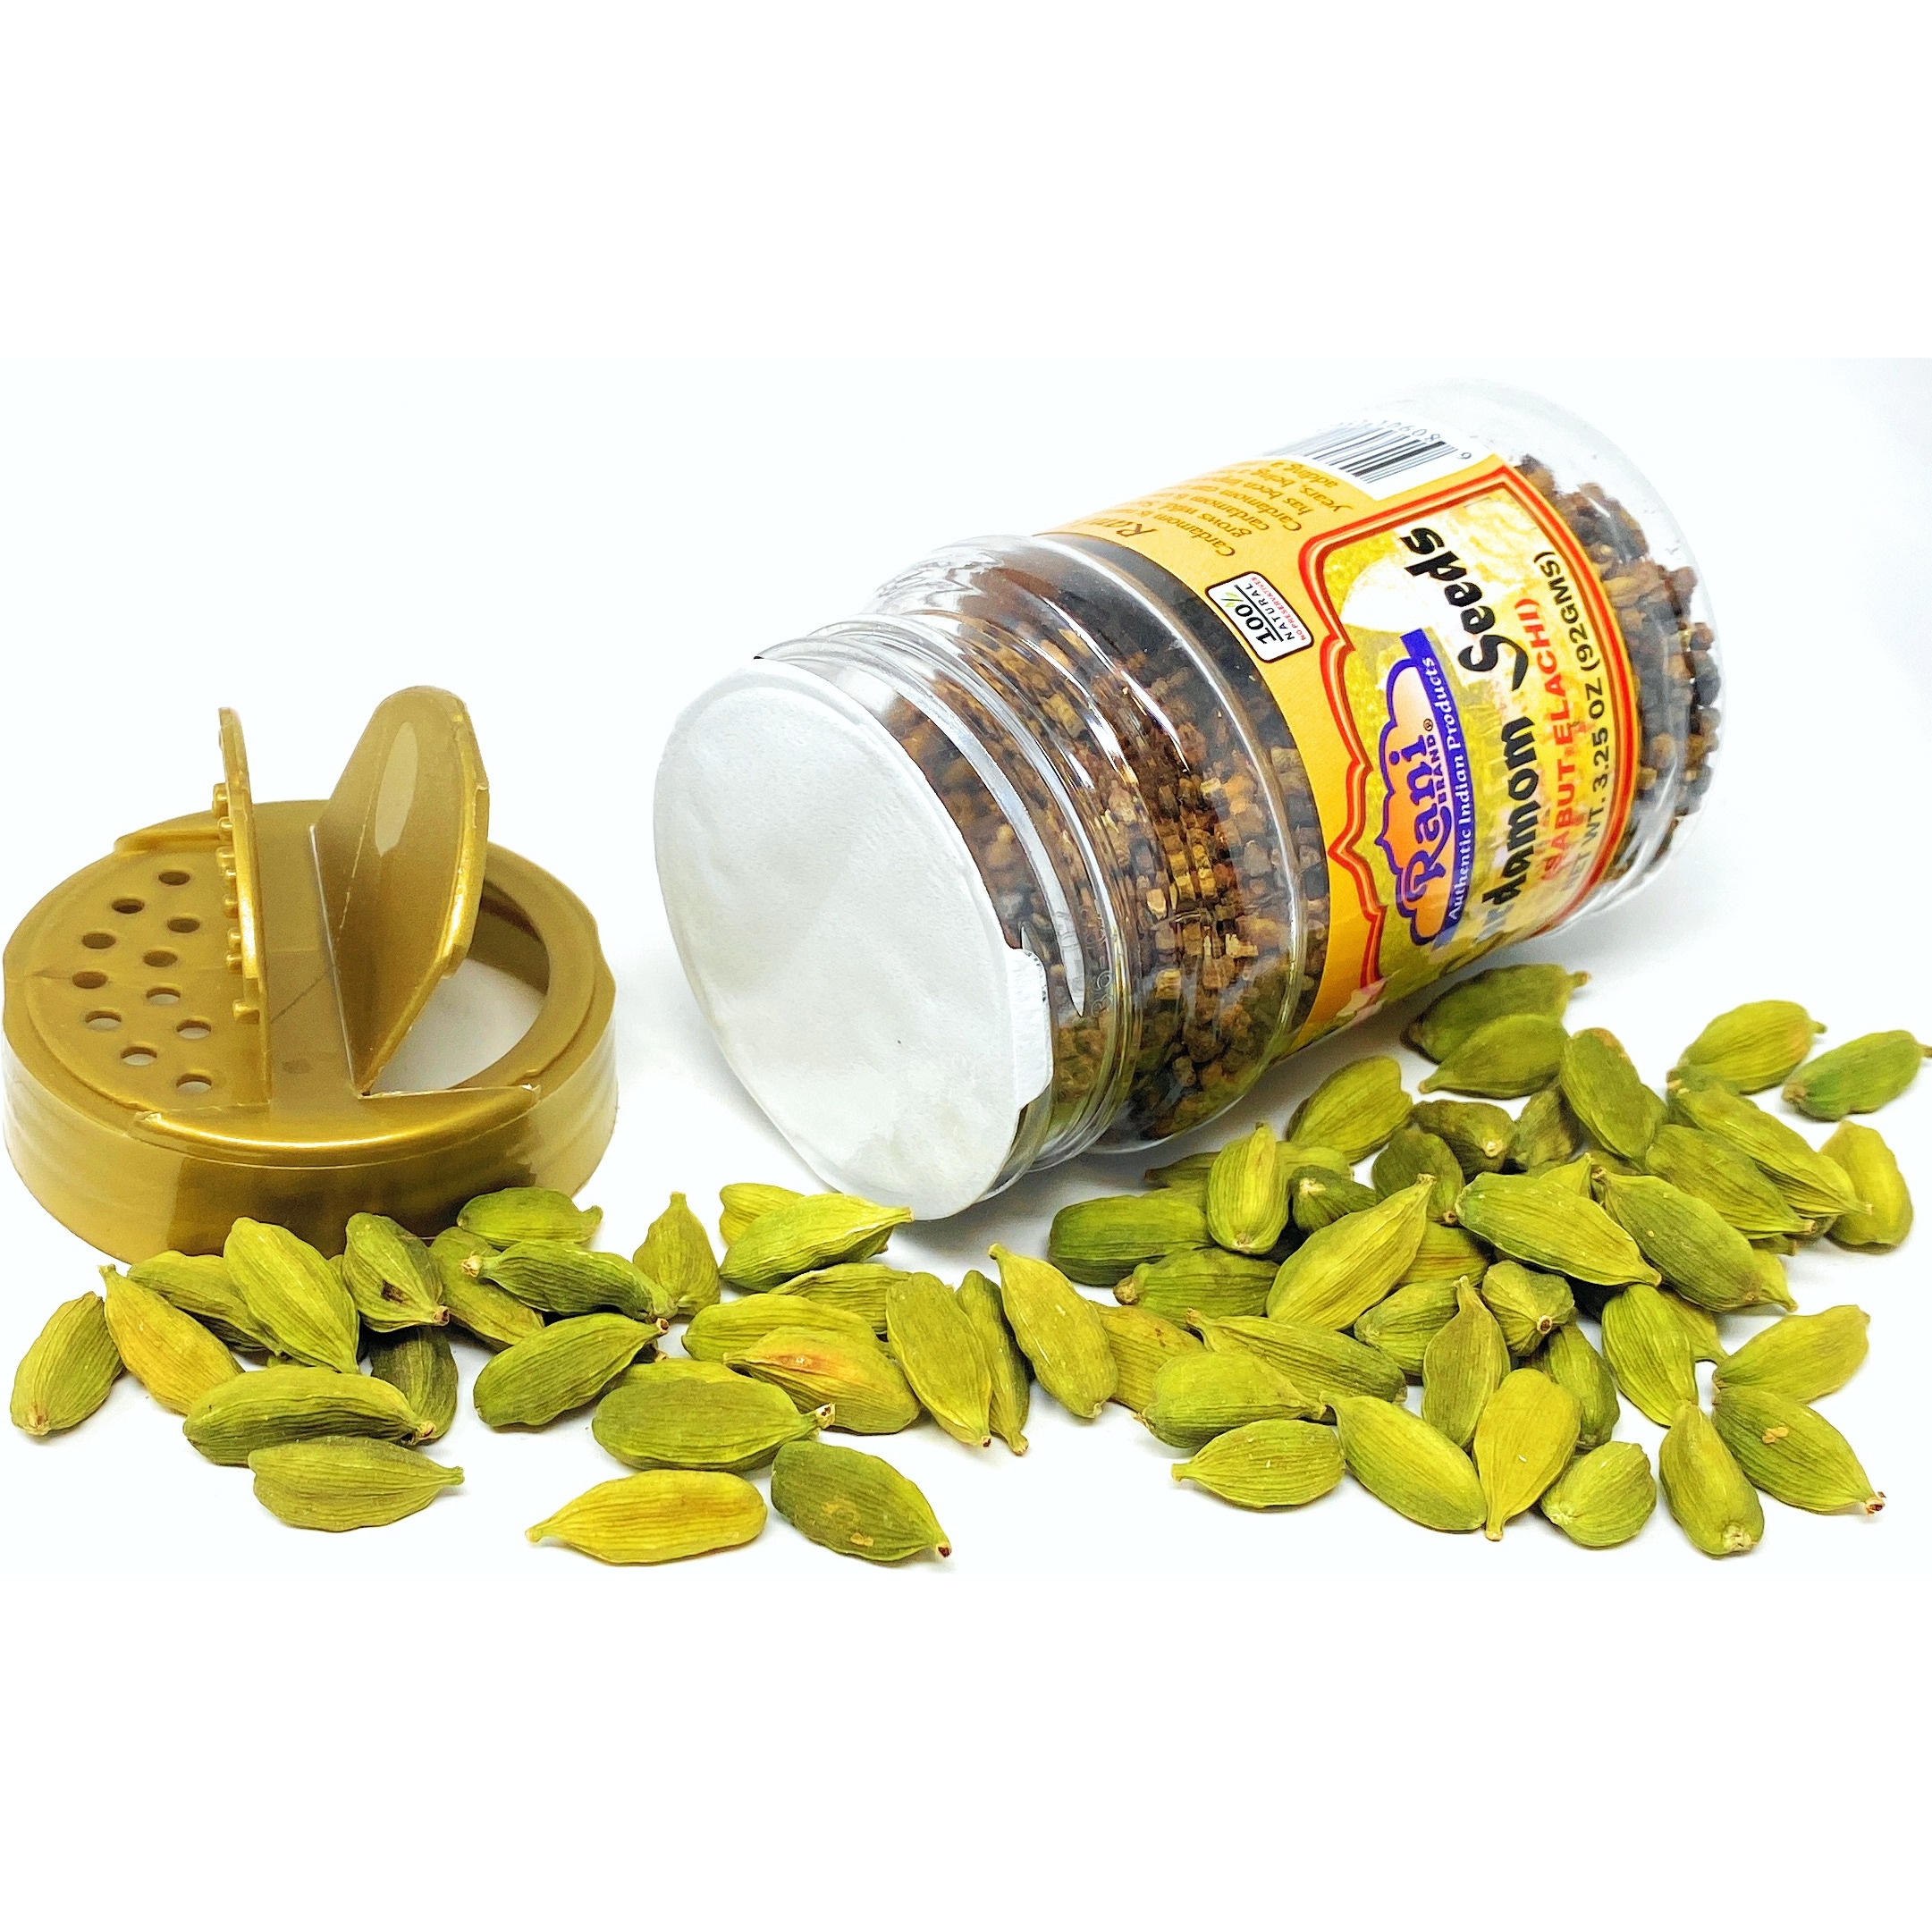 Rani Cardamom (Elachi) Decorticated Seeds Indian Spice 1.4oz (40g) ~ All Natural | Vegan | Gluten Friendly | NON-GMO | Indian Origin